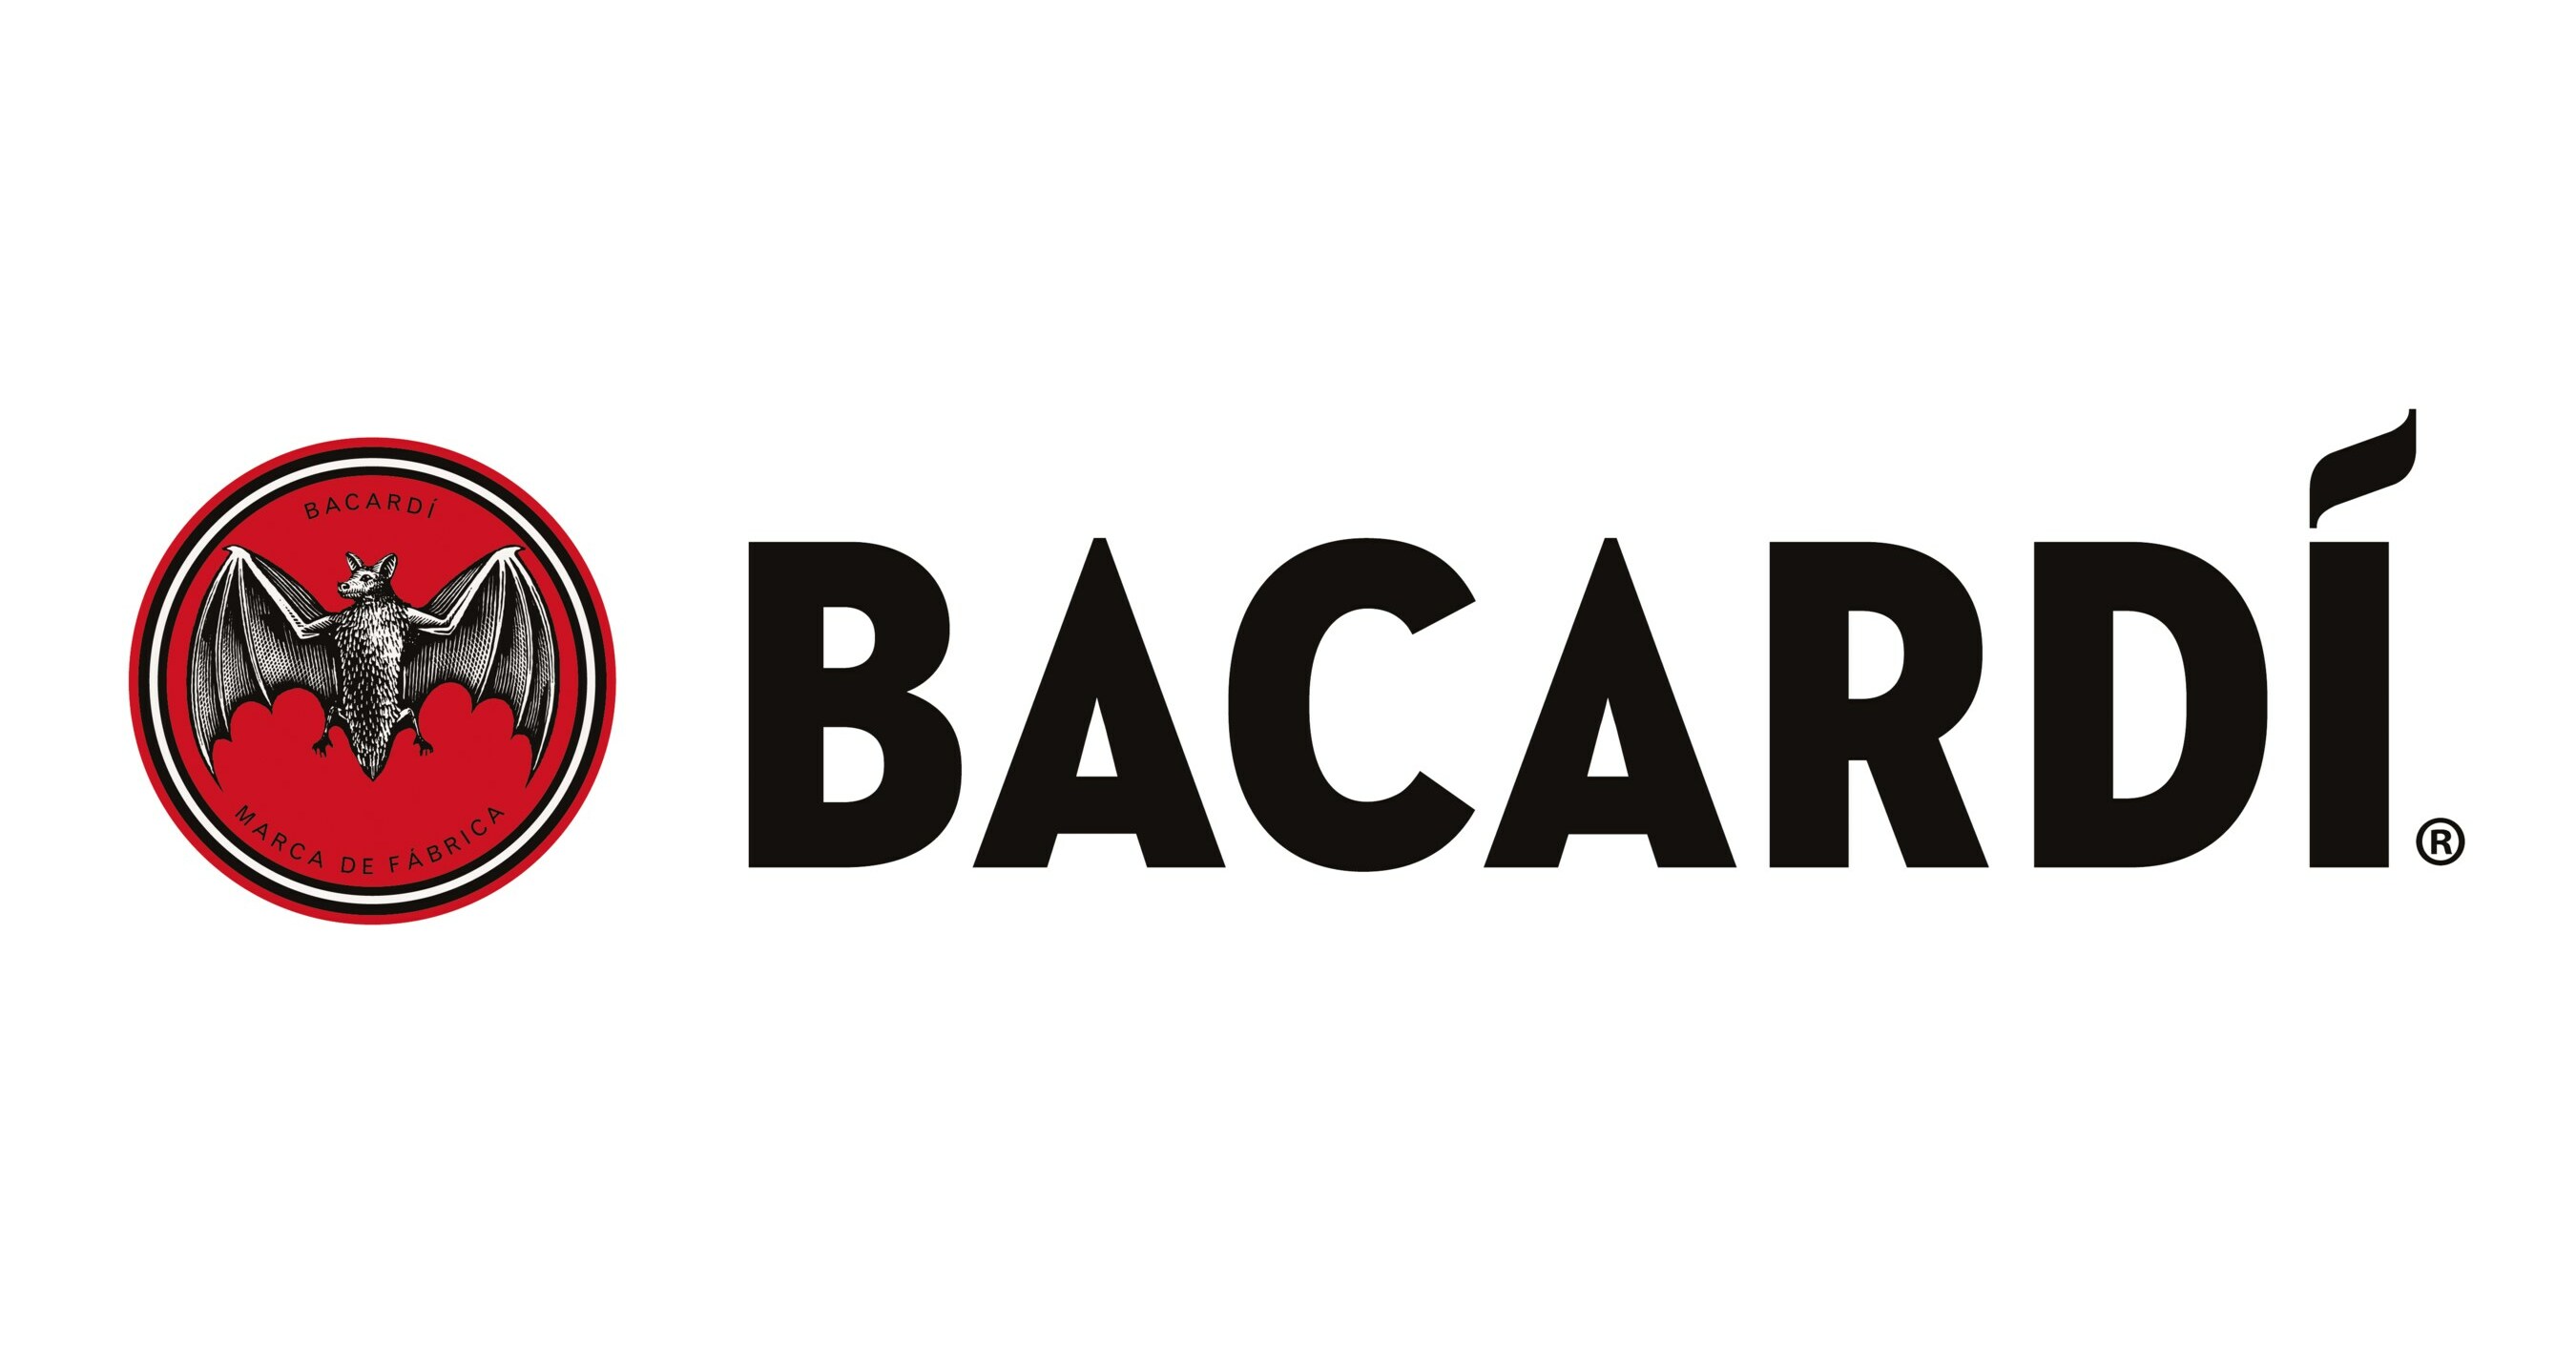 BACARDÍ Rum Launches New Limited-Edition BACARDÍ Premium Orange Variant, Ocho Sevillian Reserva Cask Finish